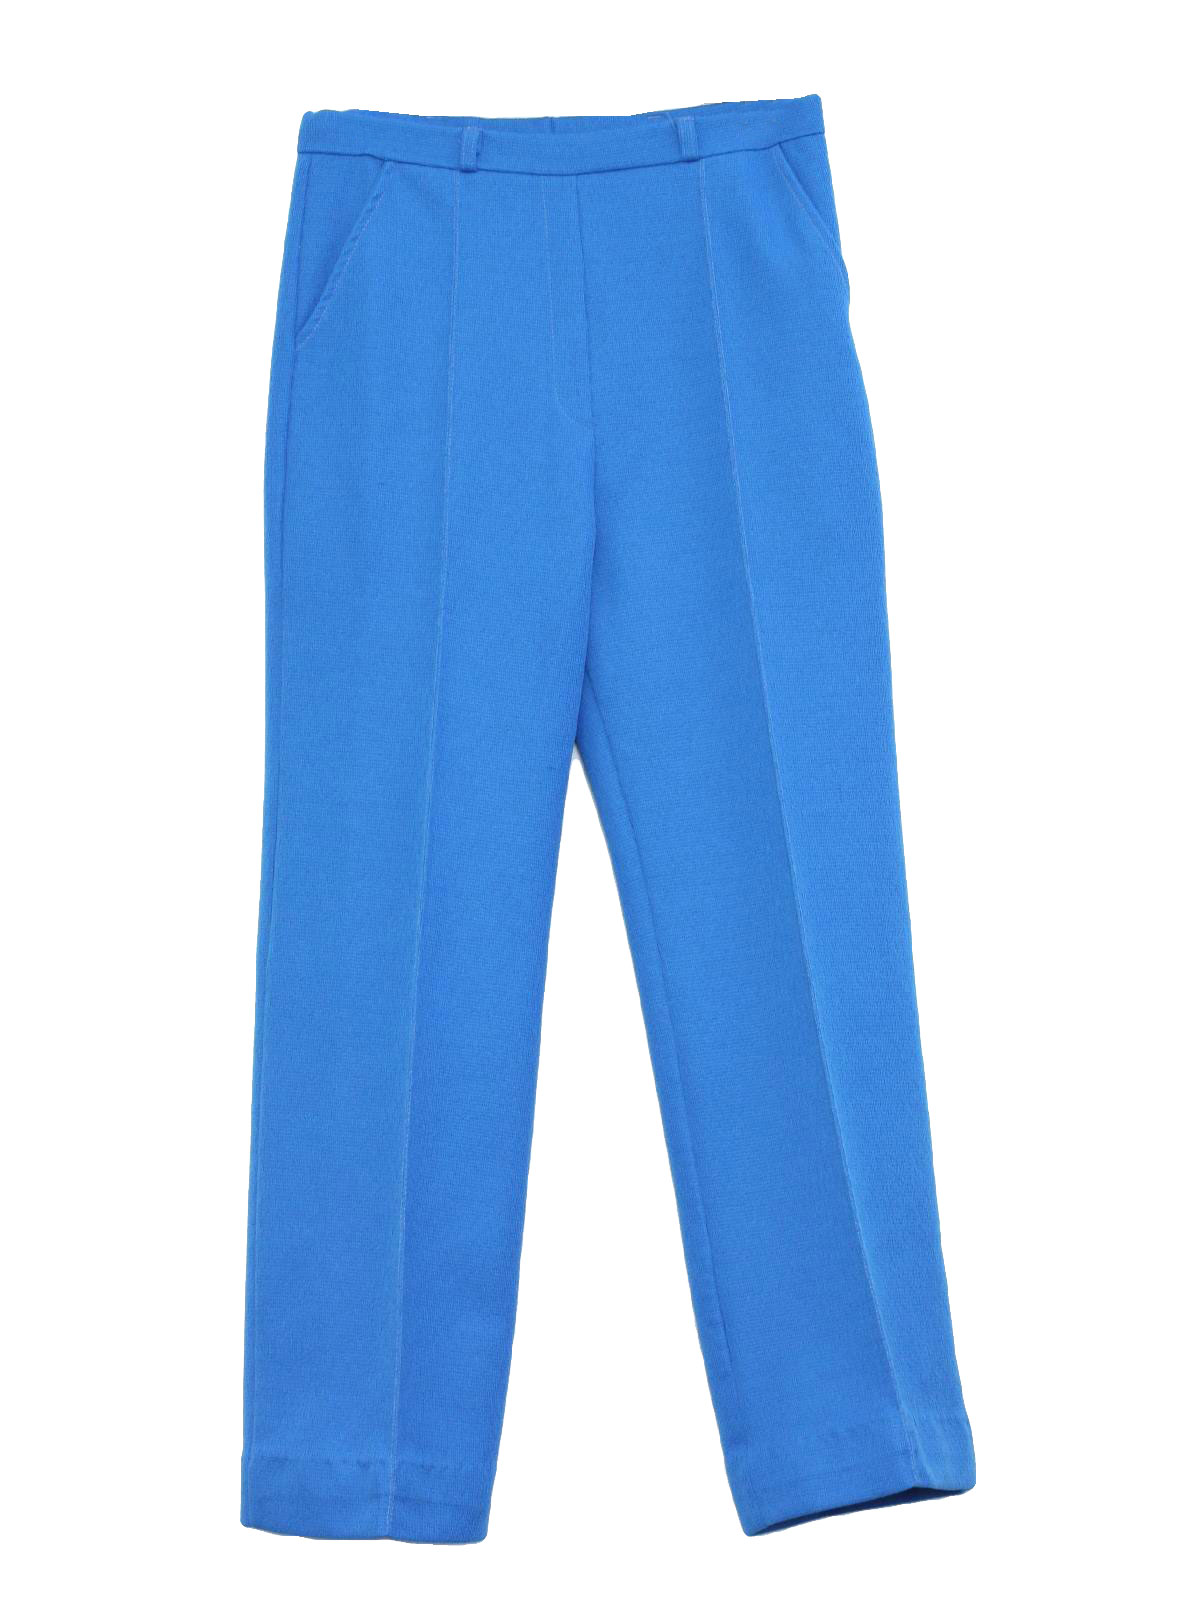 Retro 1970's Pants (Lady Blair) : 70s -Lady Blair- Womens royal blue ...